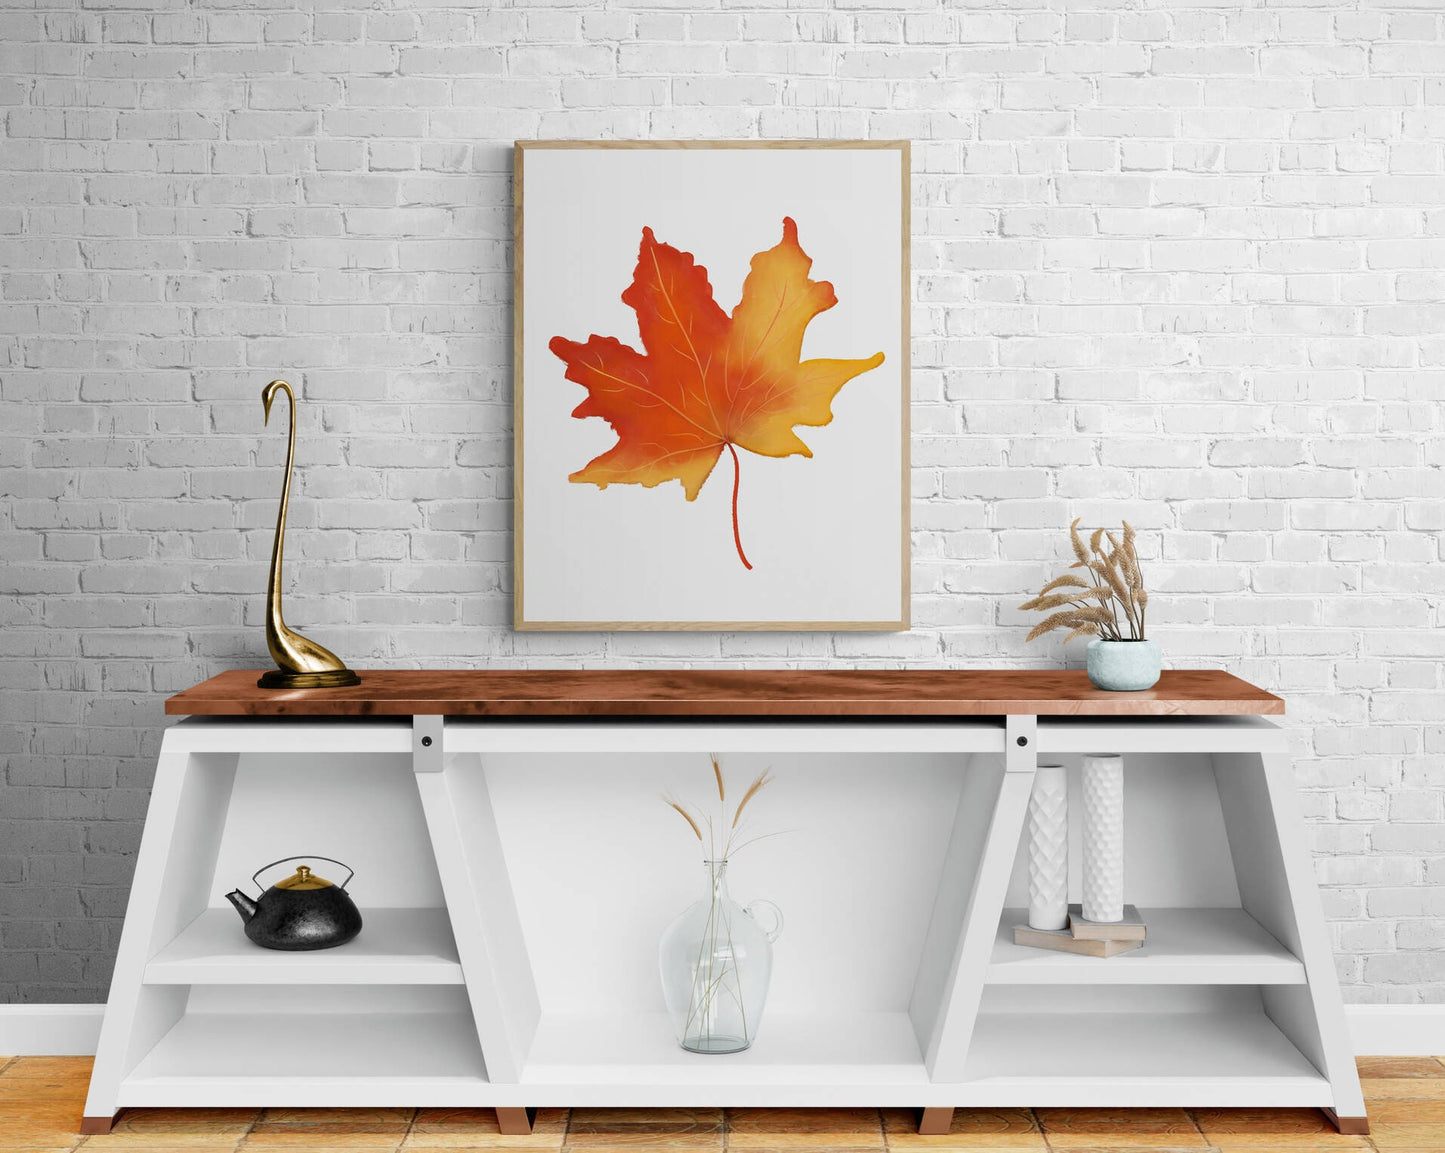 Autumn Leaves Print, Autumn Painting, Fall Decor, Living Room Home Art, Holiday Wall Art, Leaf Illustration, Housewarming Gift